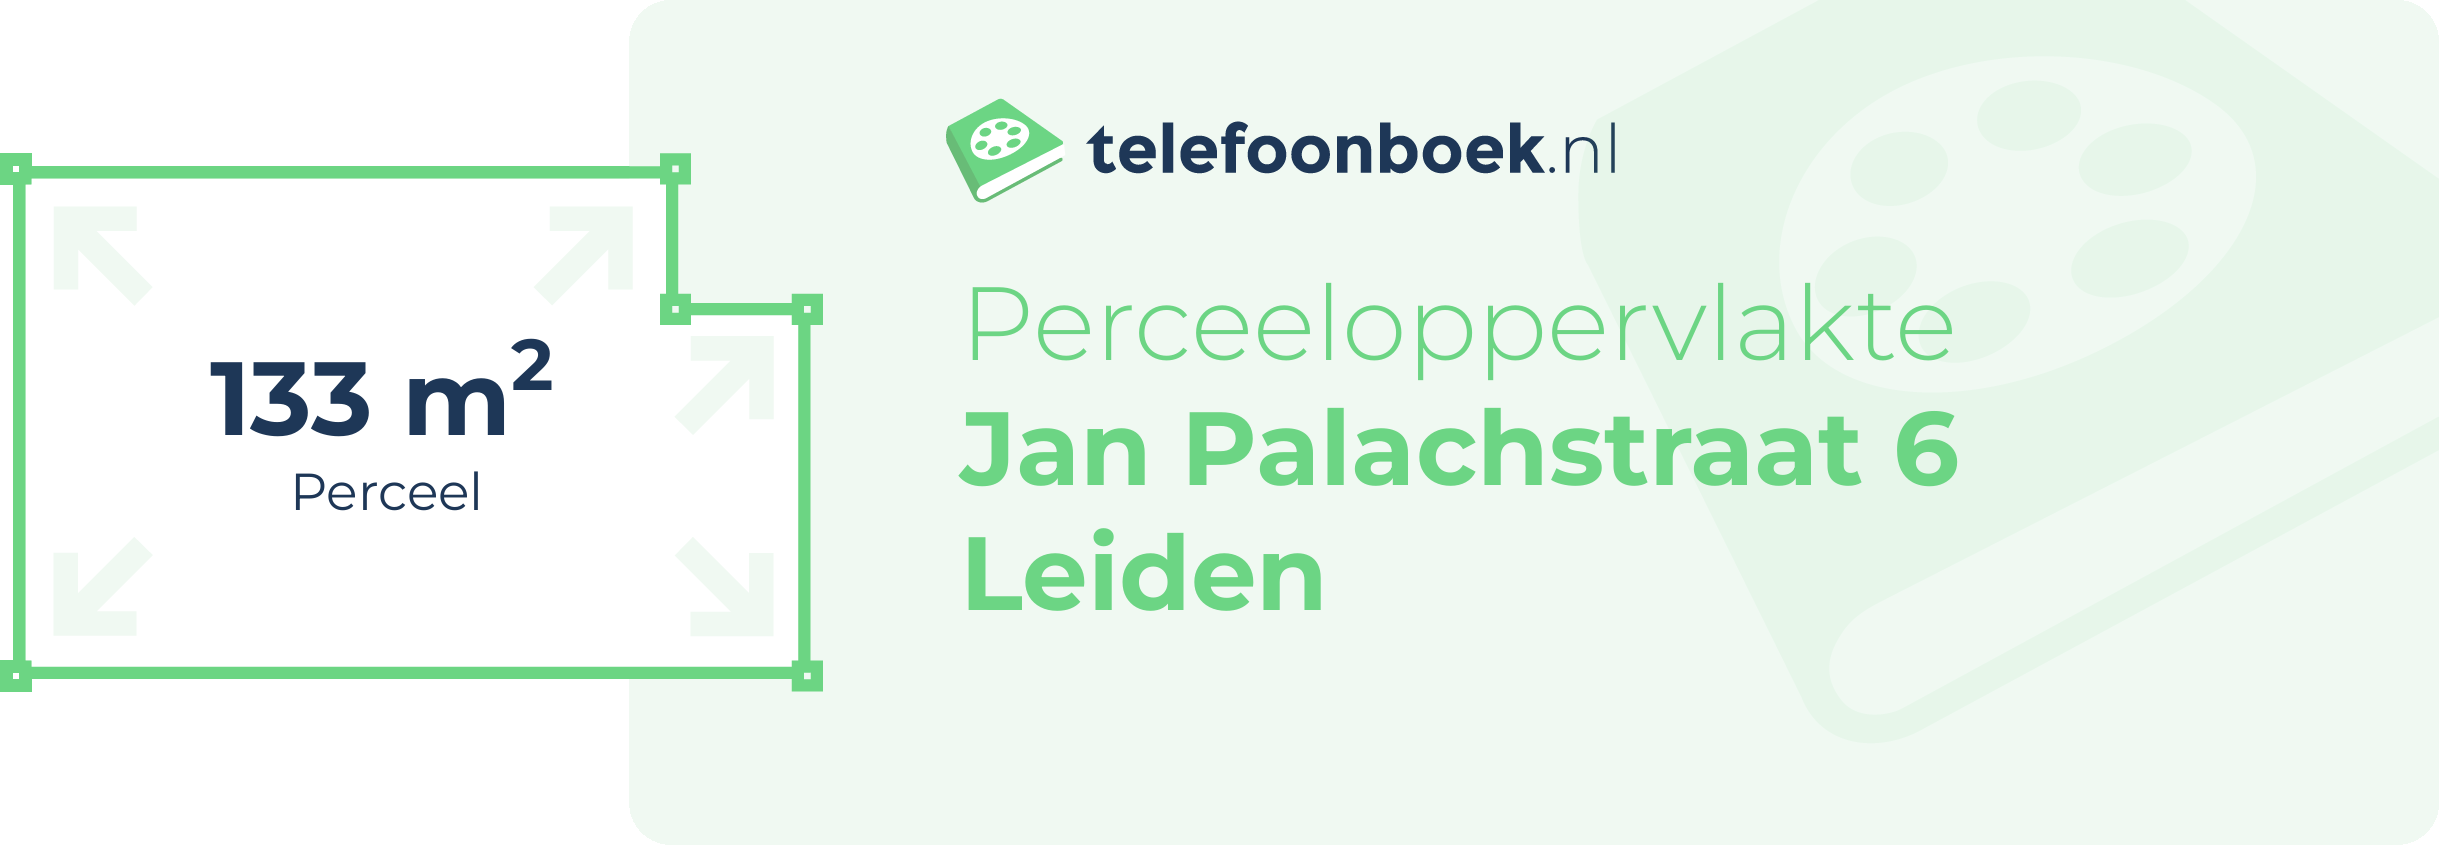 Perceeloppervlakte Jan Palachstraat 6 Leiden